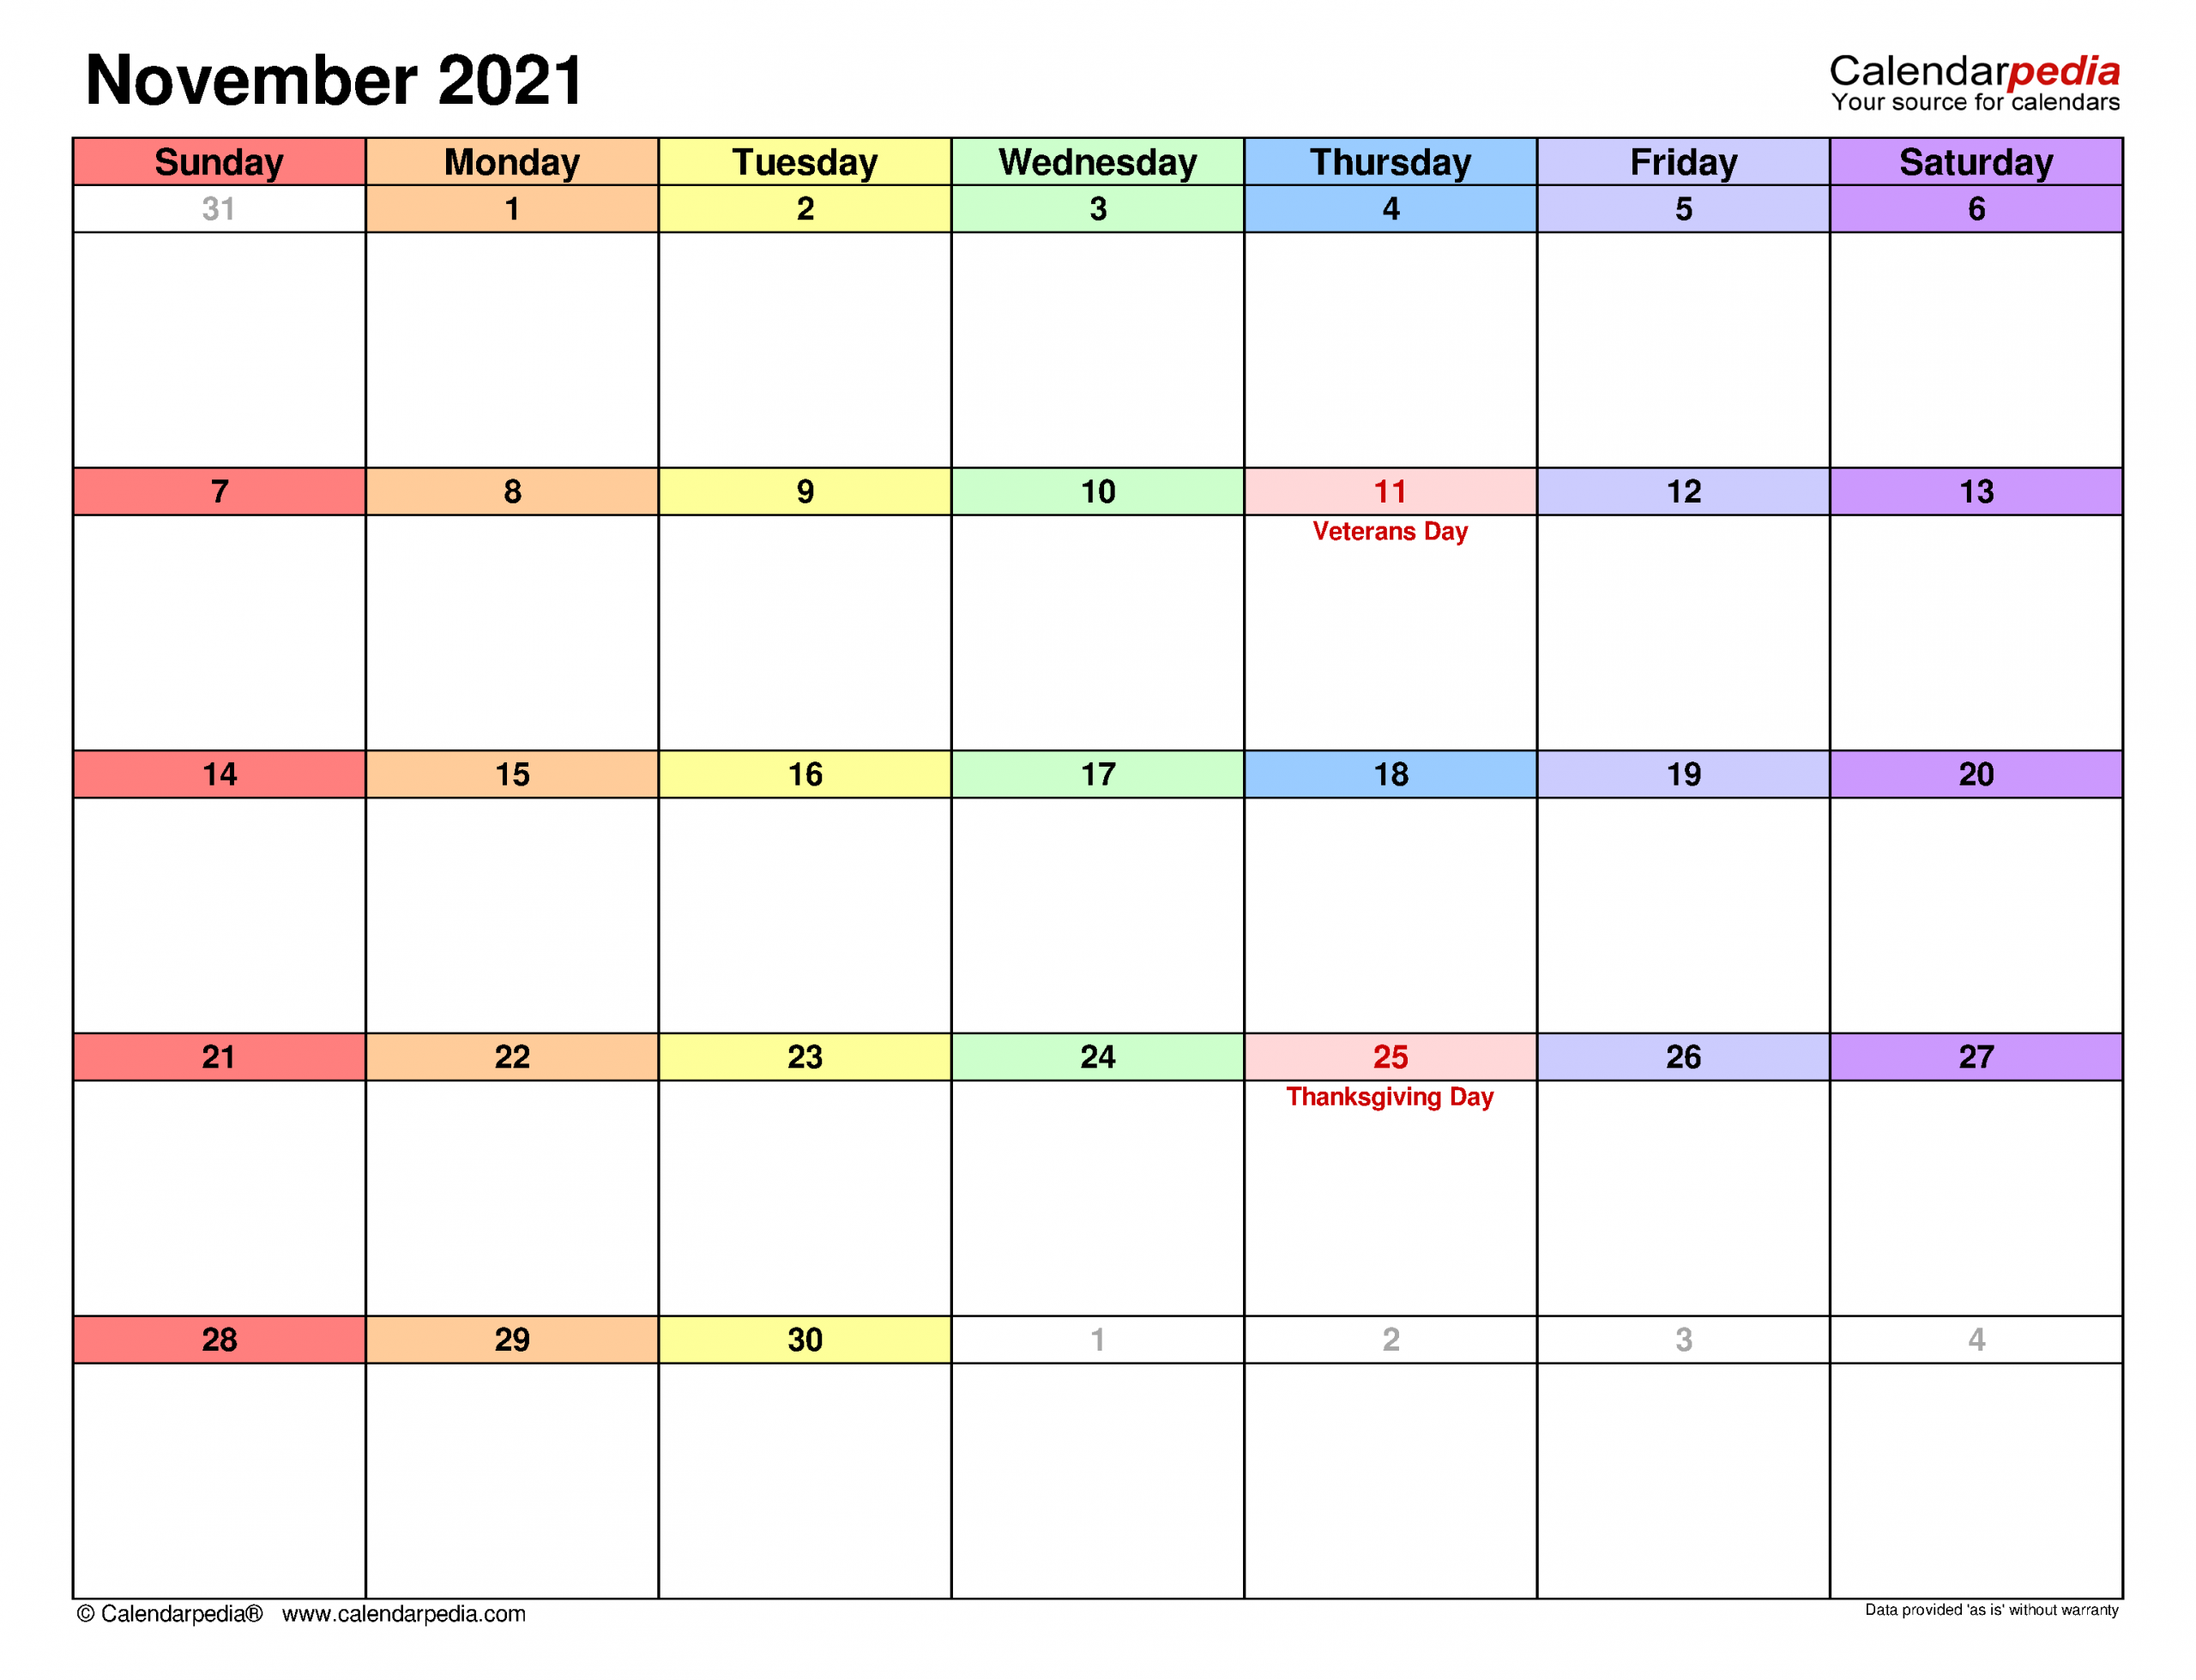 November 2021 Calendar | Templates For Word, Excel And Pdf November 2021 Monthly Calendar